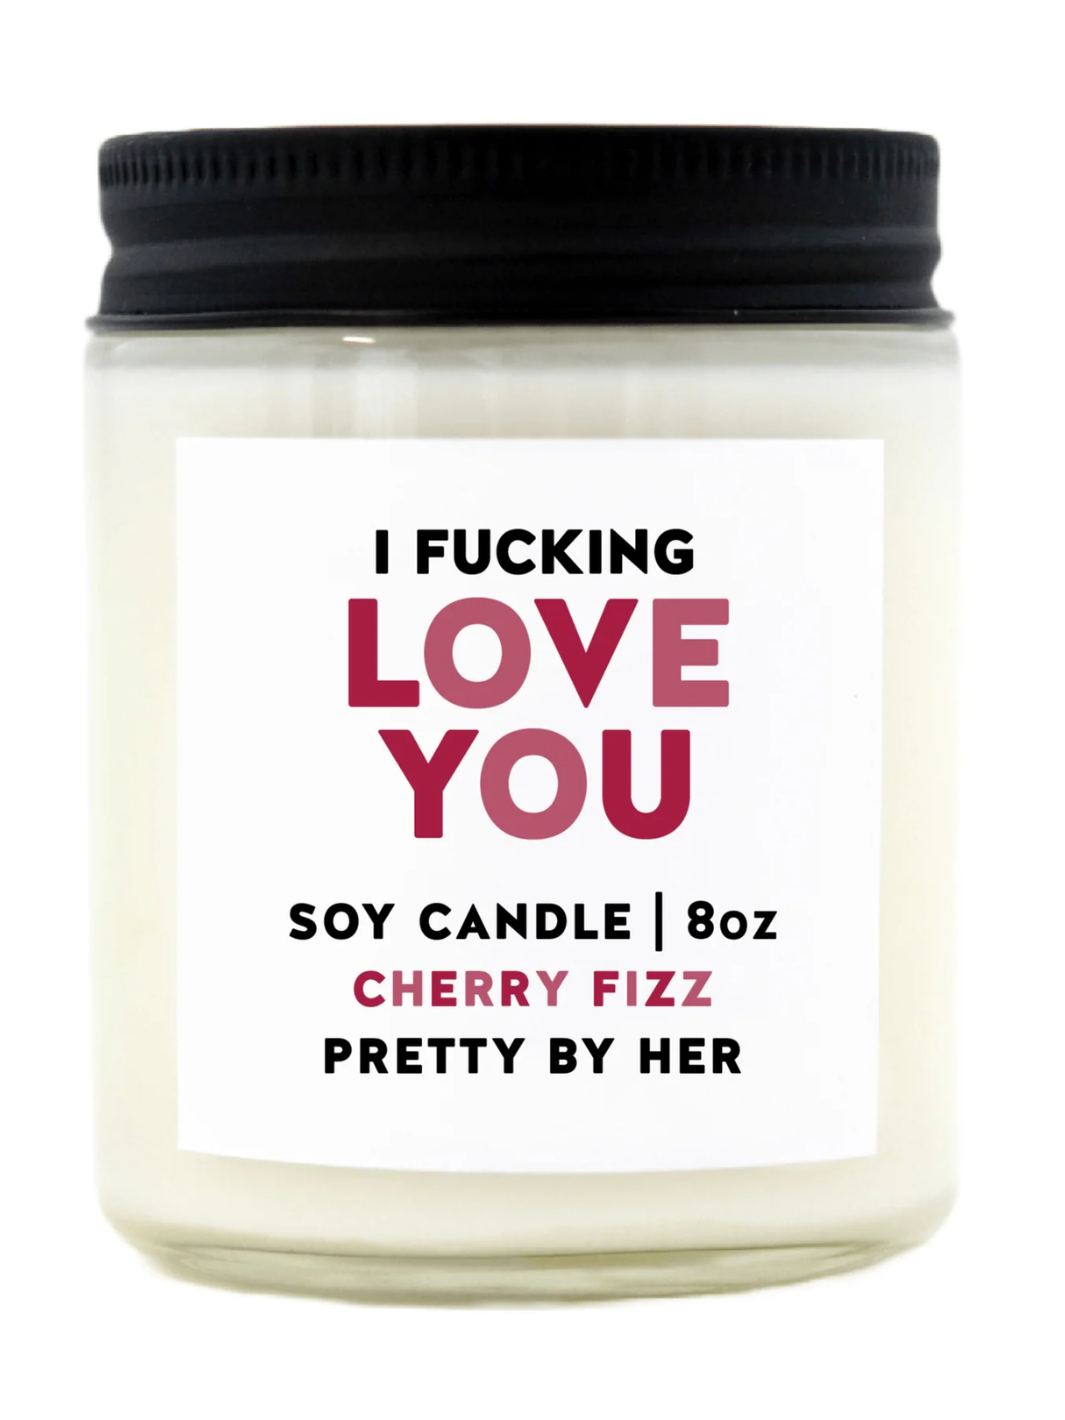 I Fucking Love You Candle